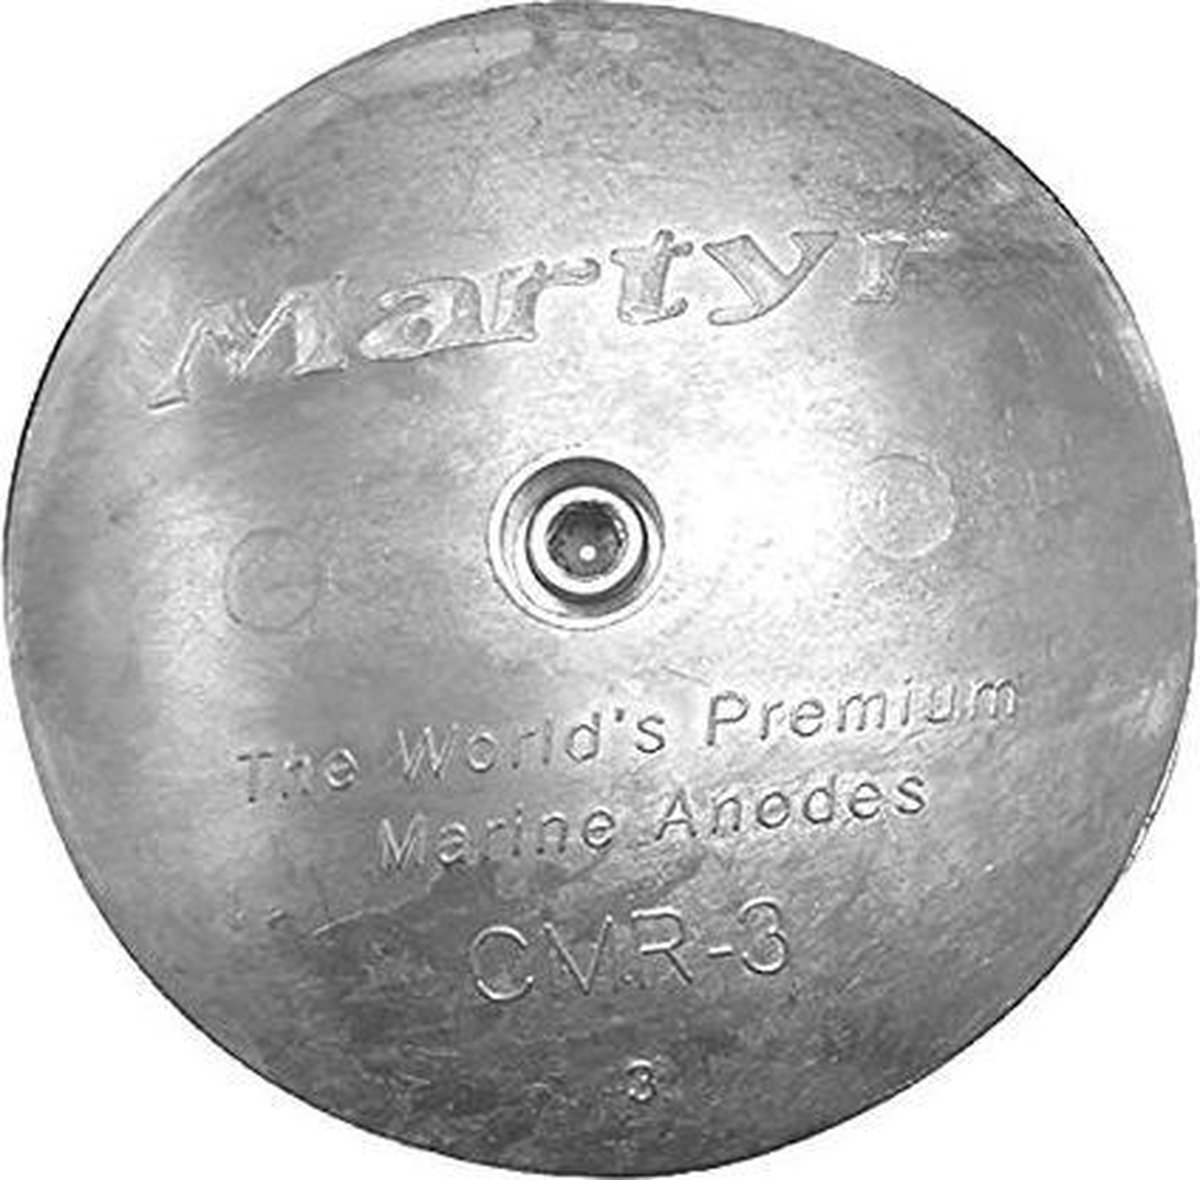 Aluminium trimvlak anode 5 1/8” 130 mm (CMR-5A) - Martyr